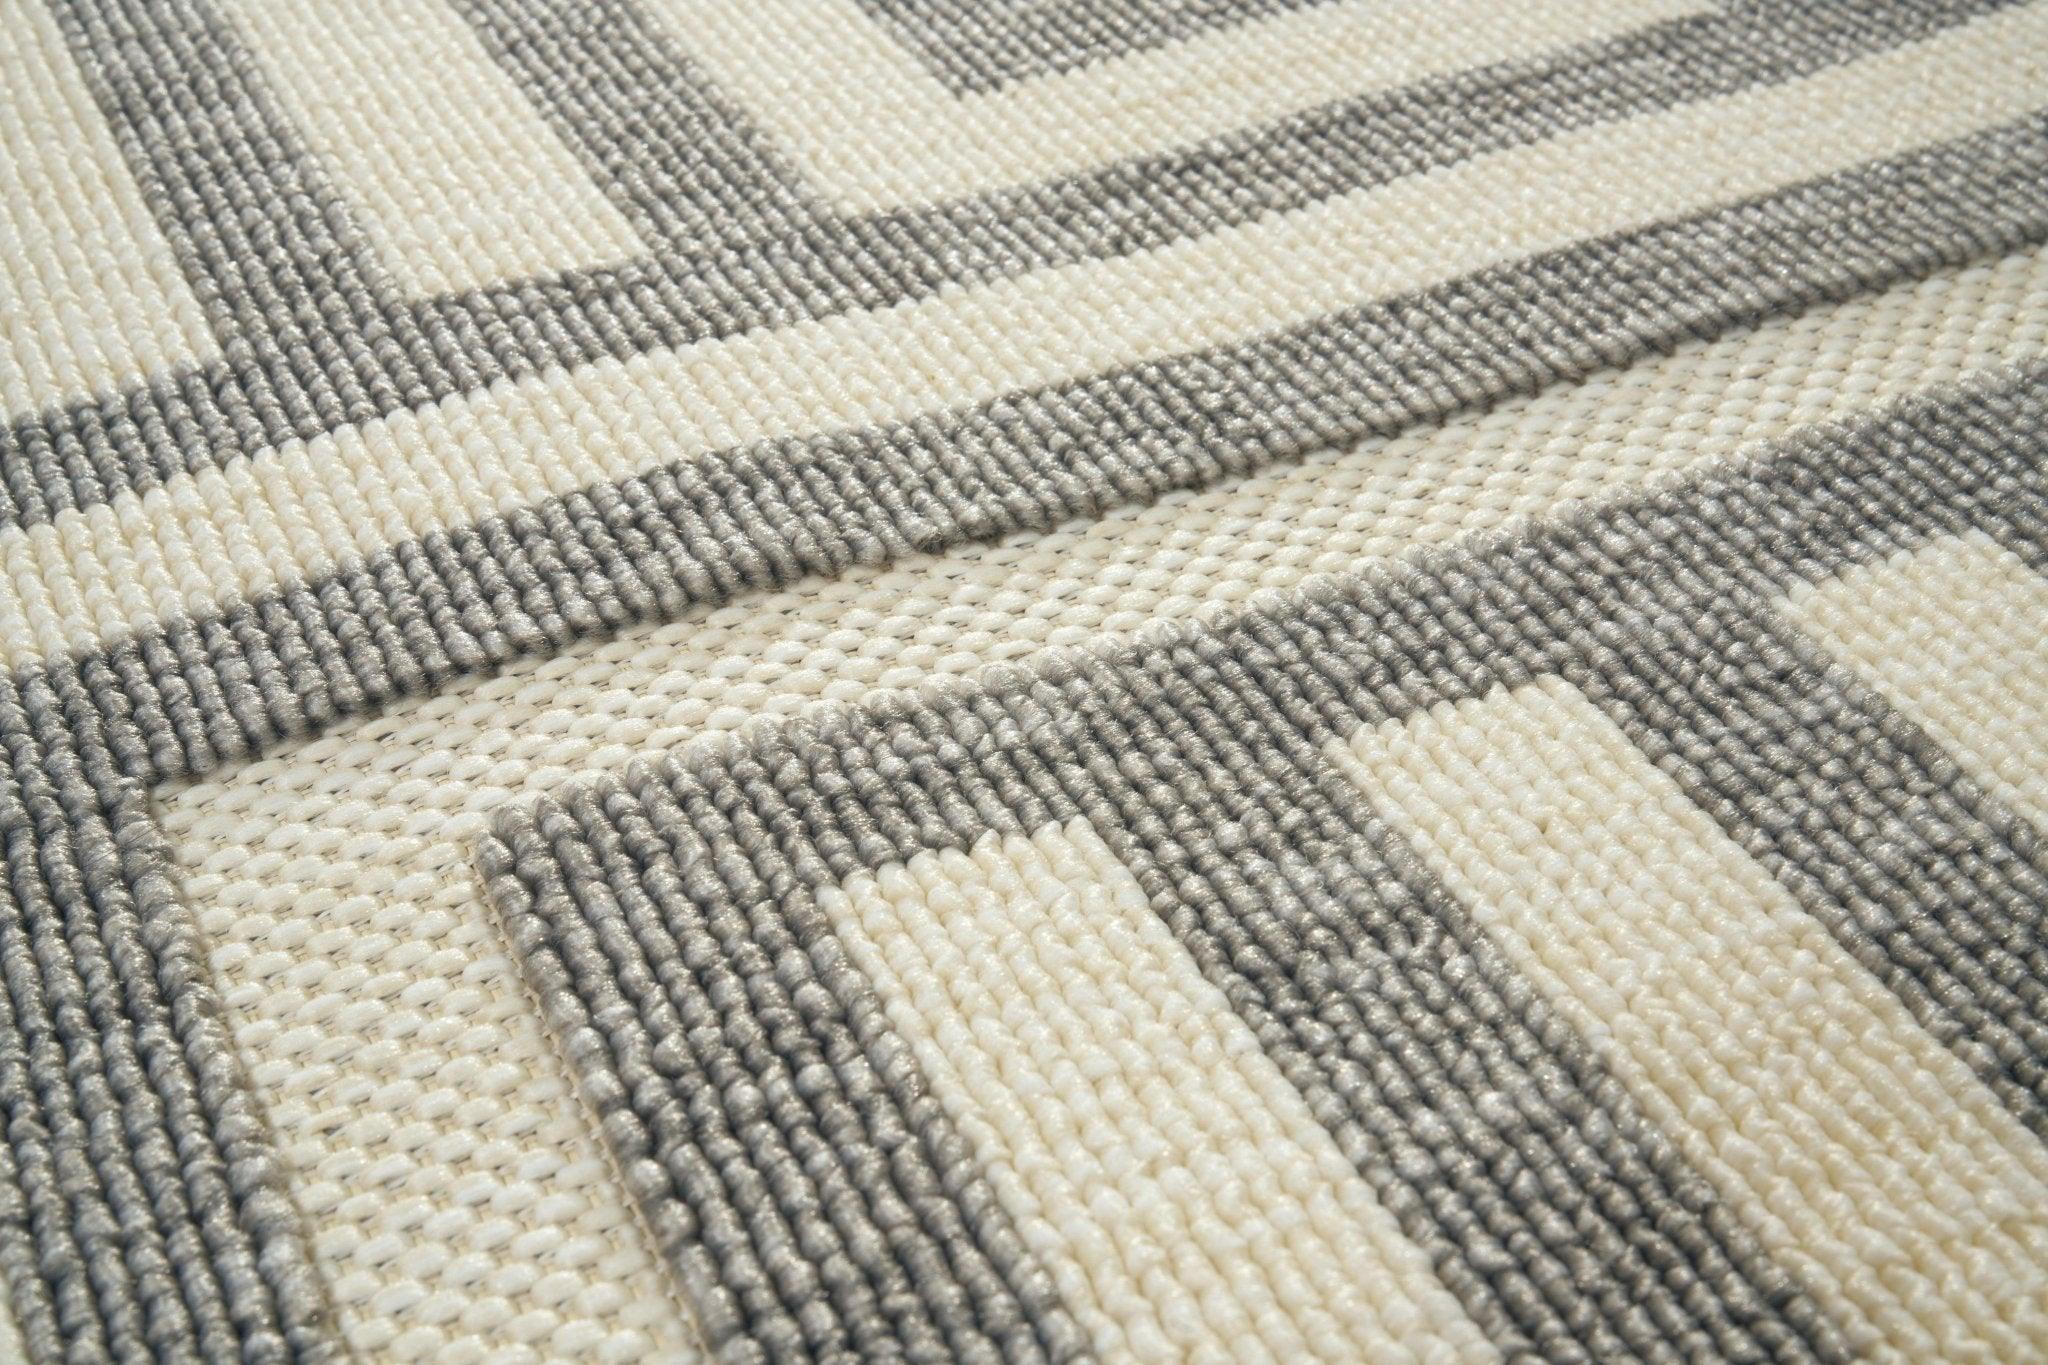 Dywan MANANA geomatryczny wzór Carpet Decor    Eye on Design